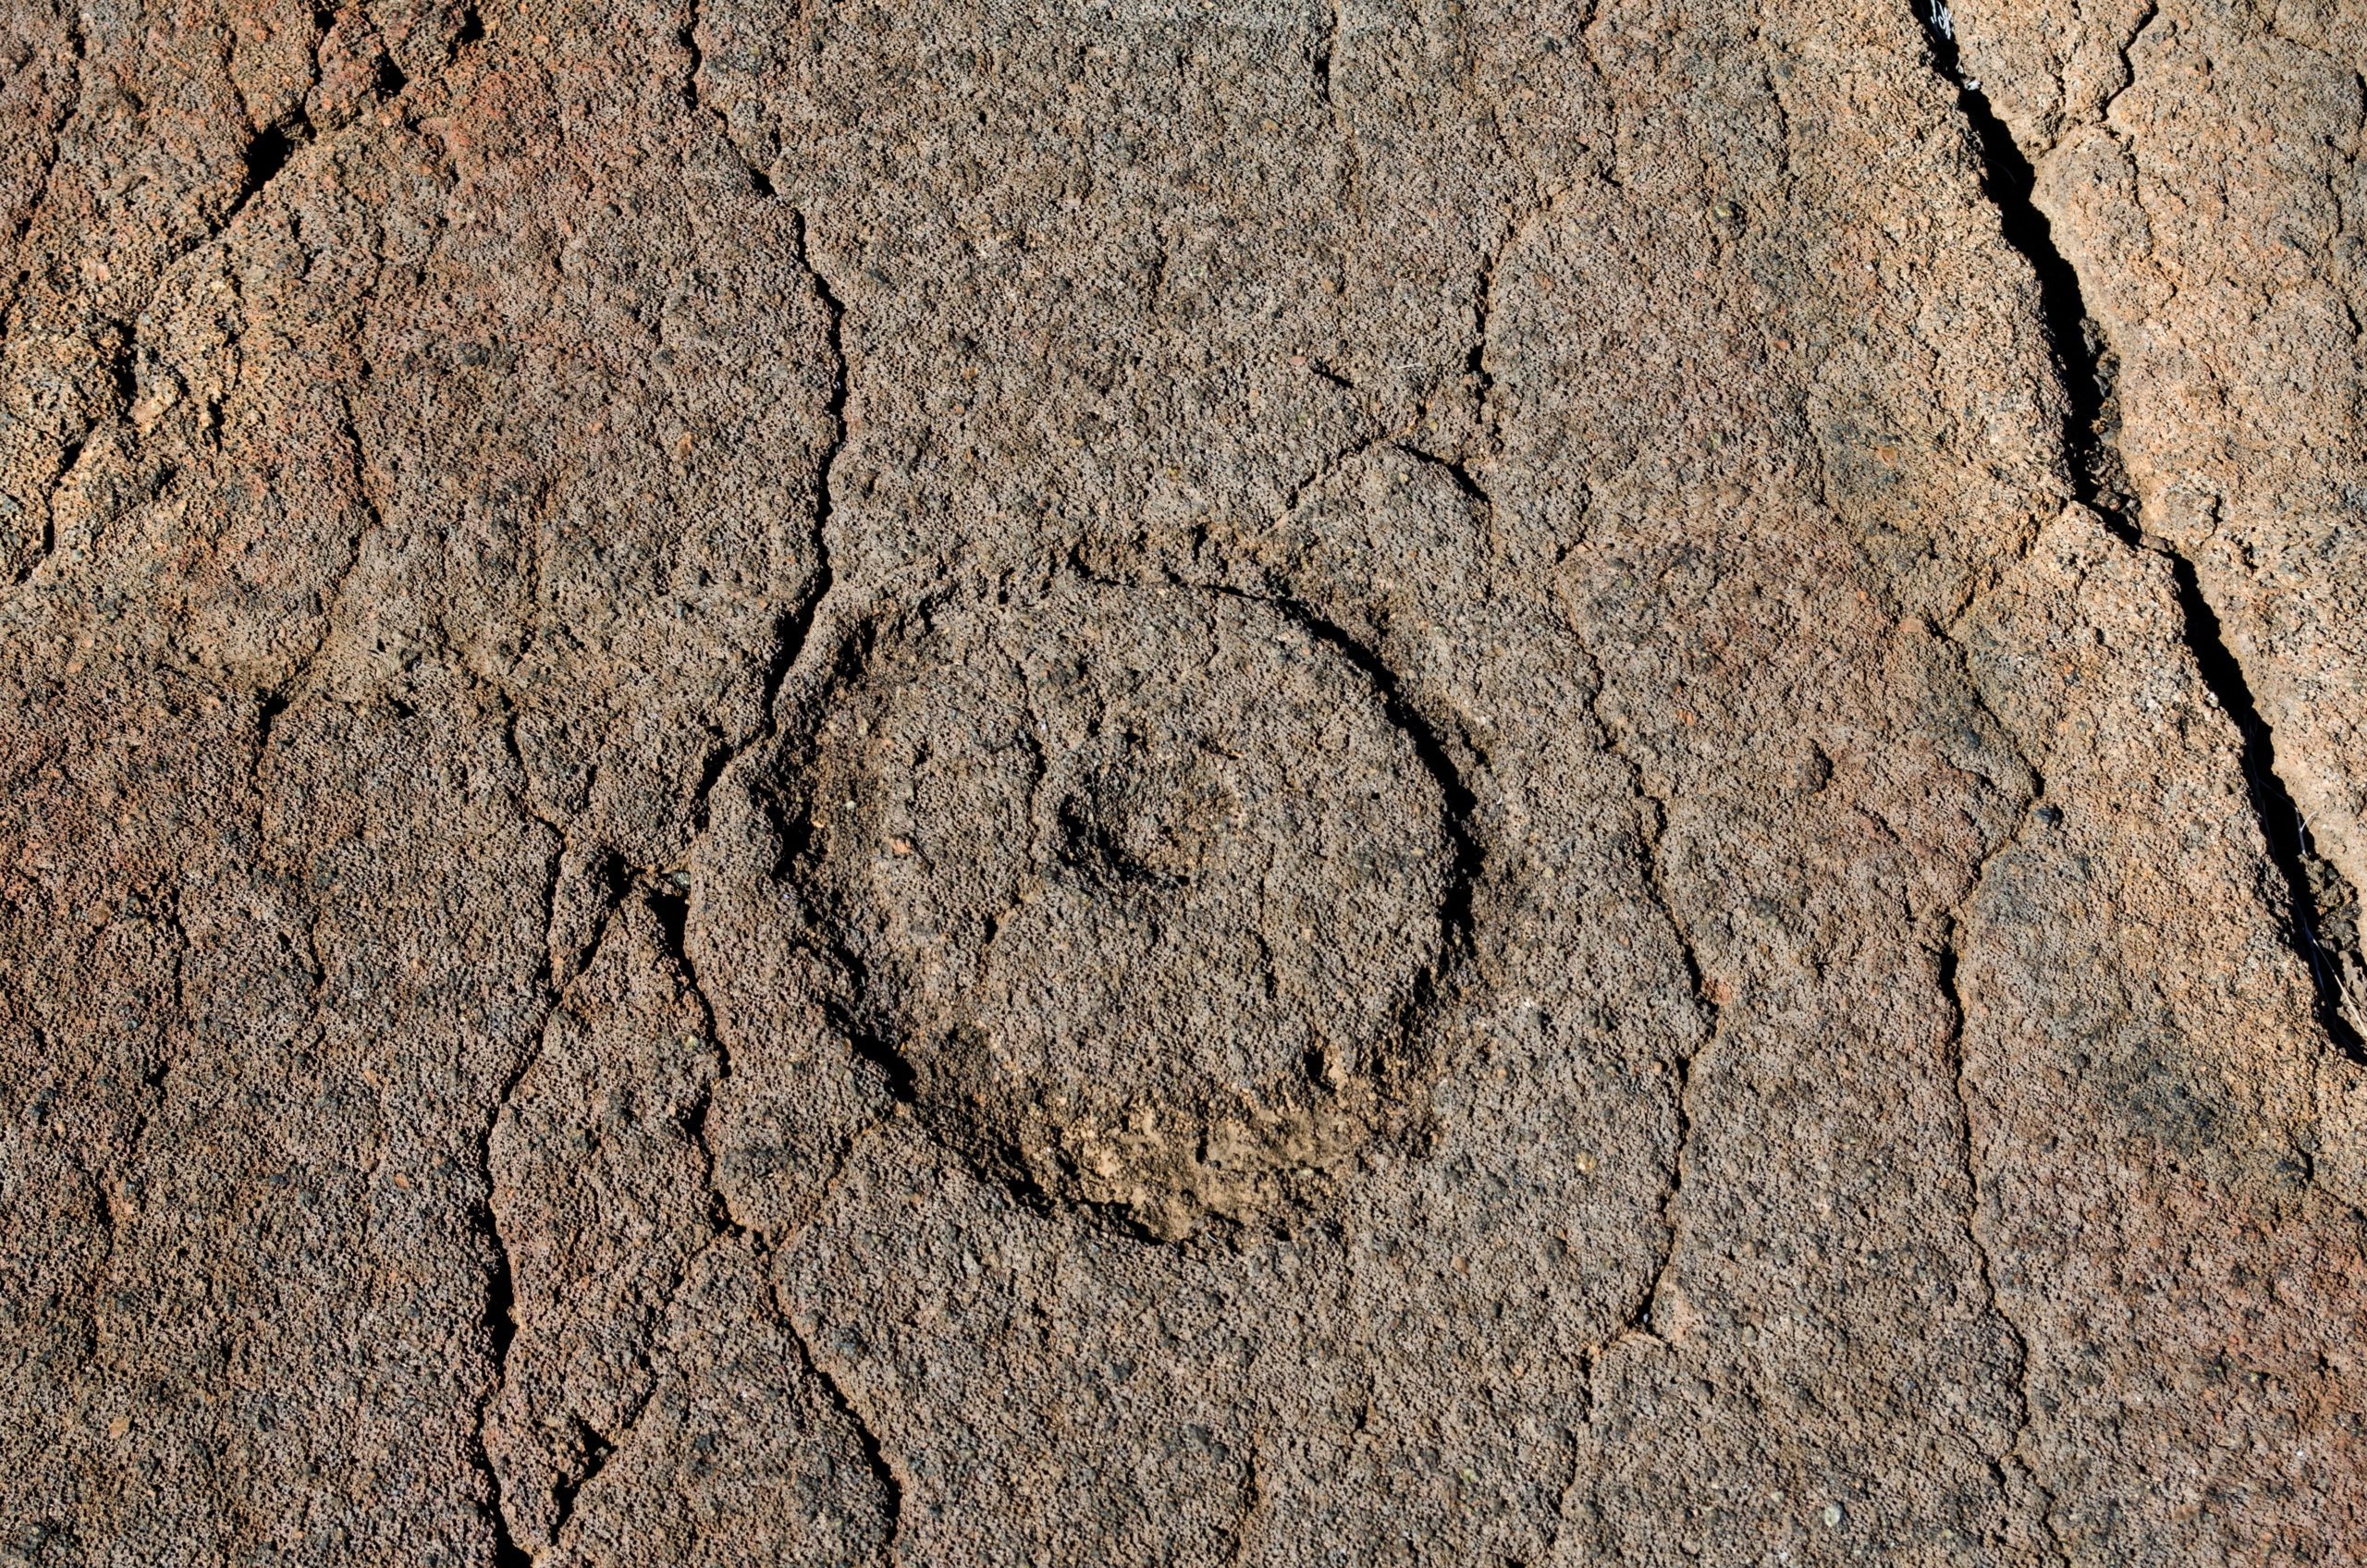 Circle petroglyph on the Big Island